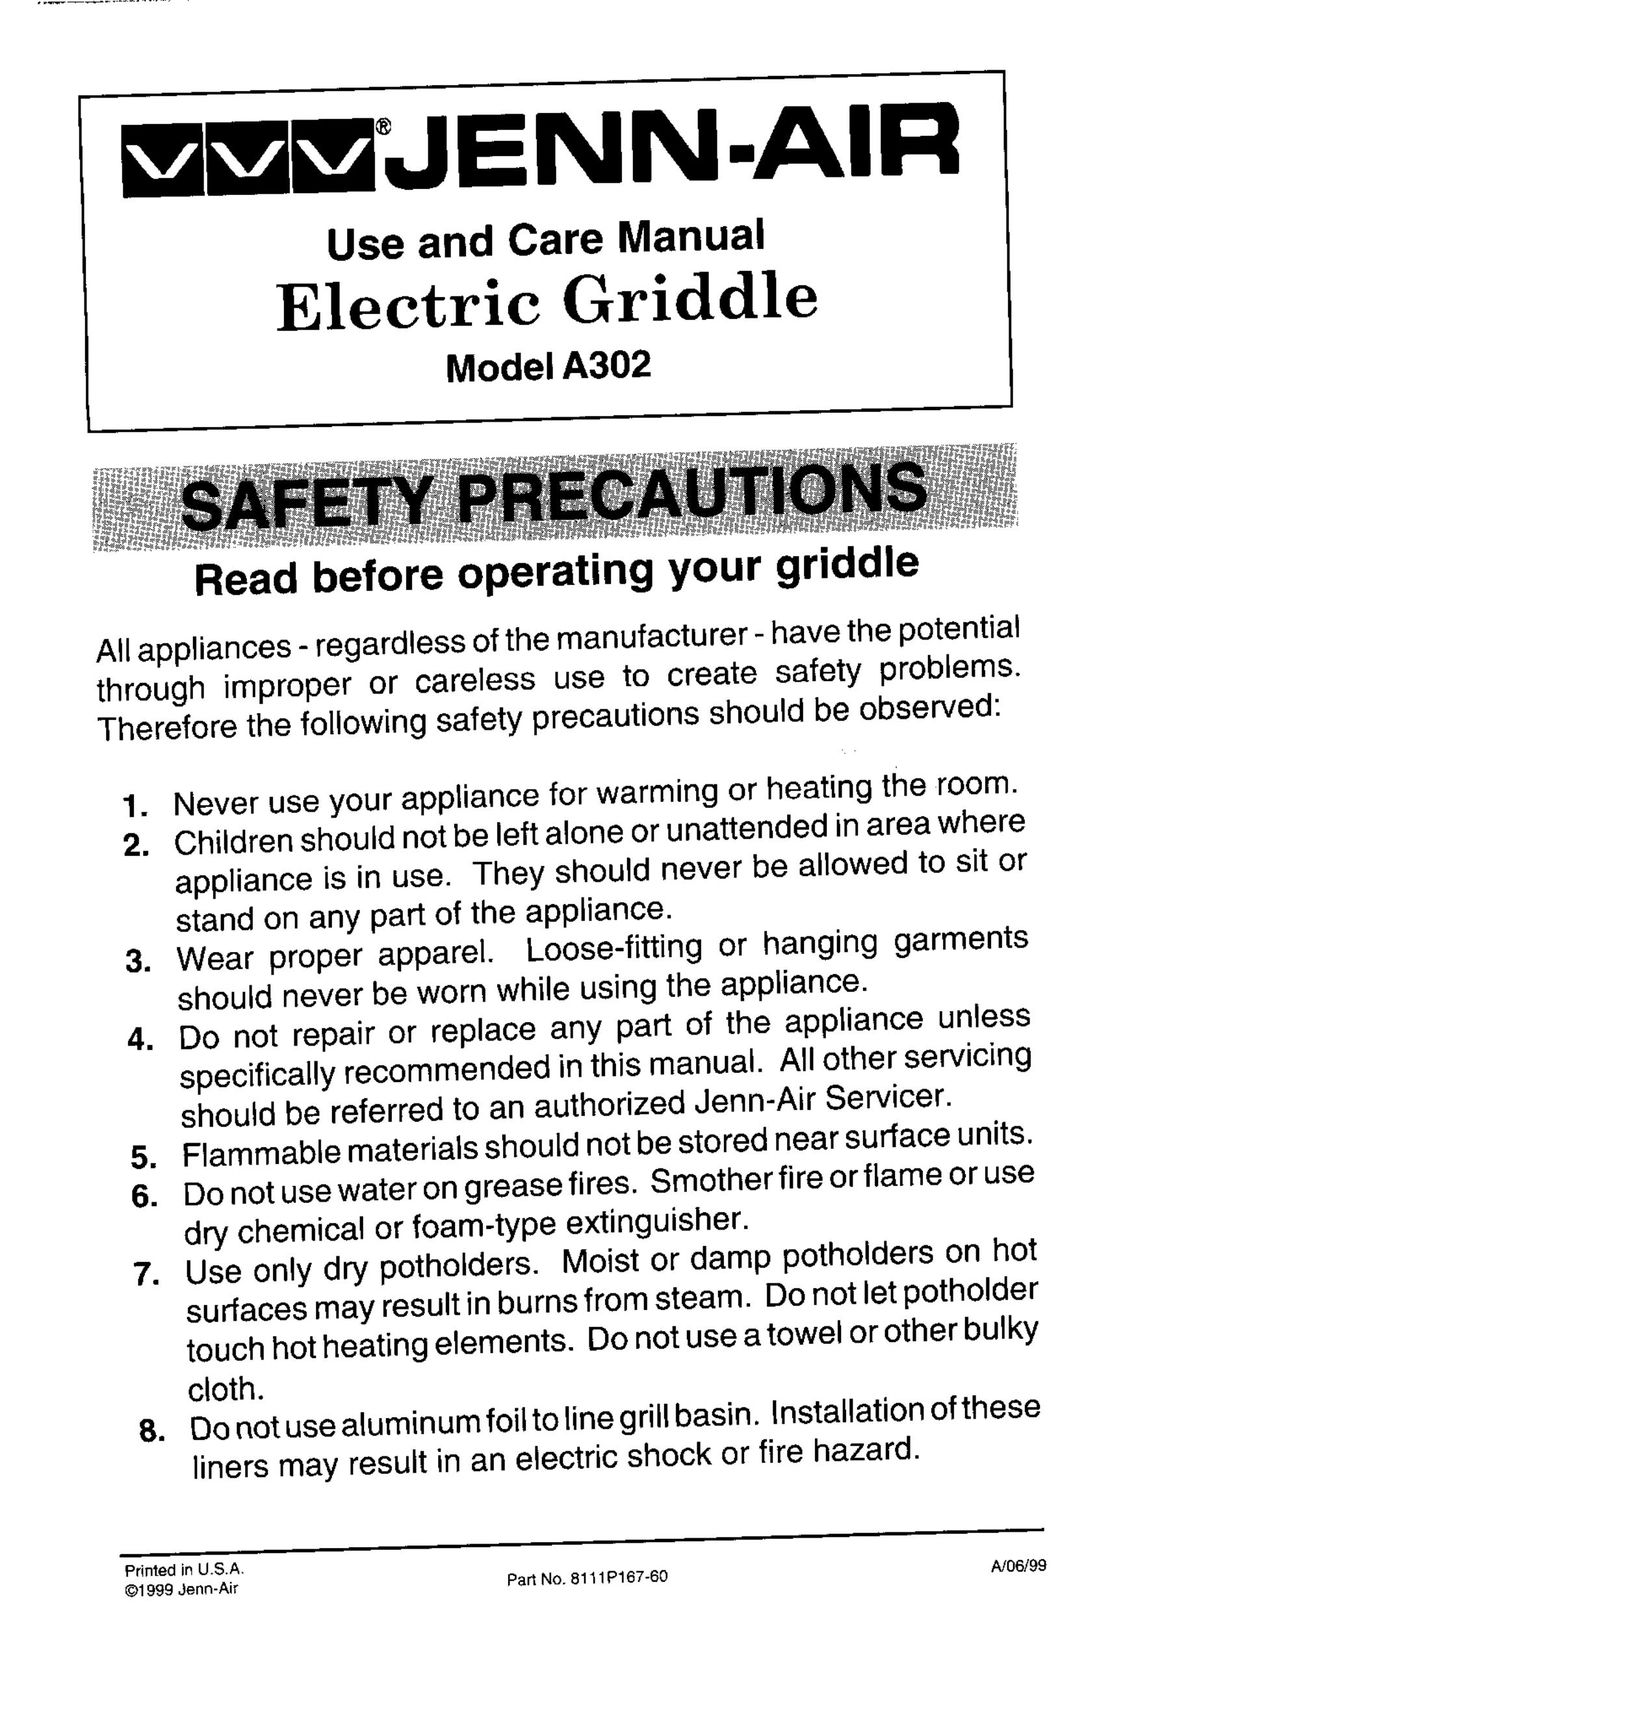 Jenn-Air A302 Griddle User Manual